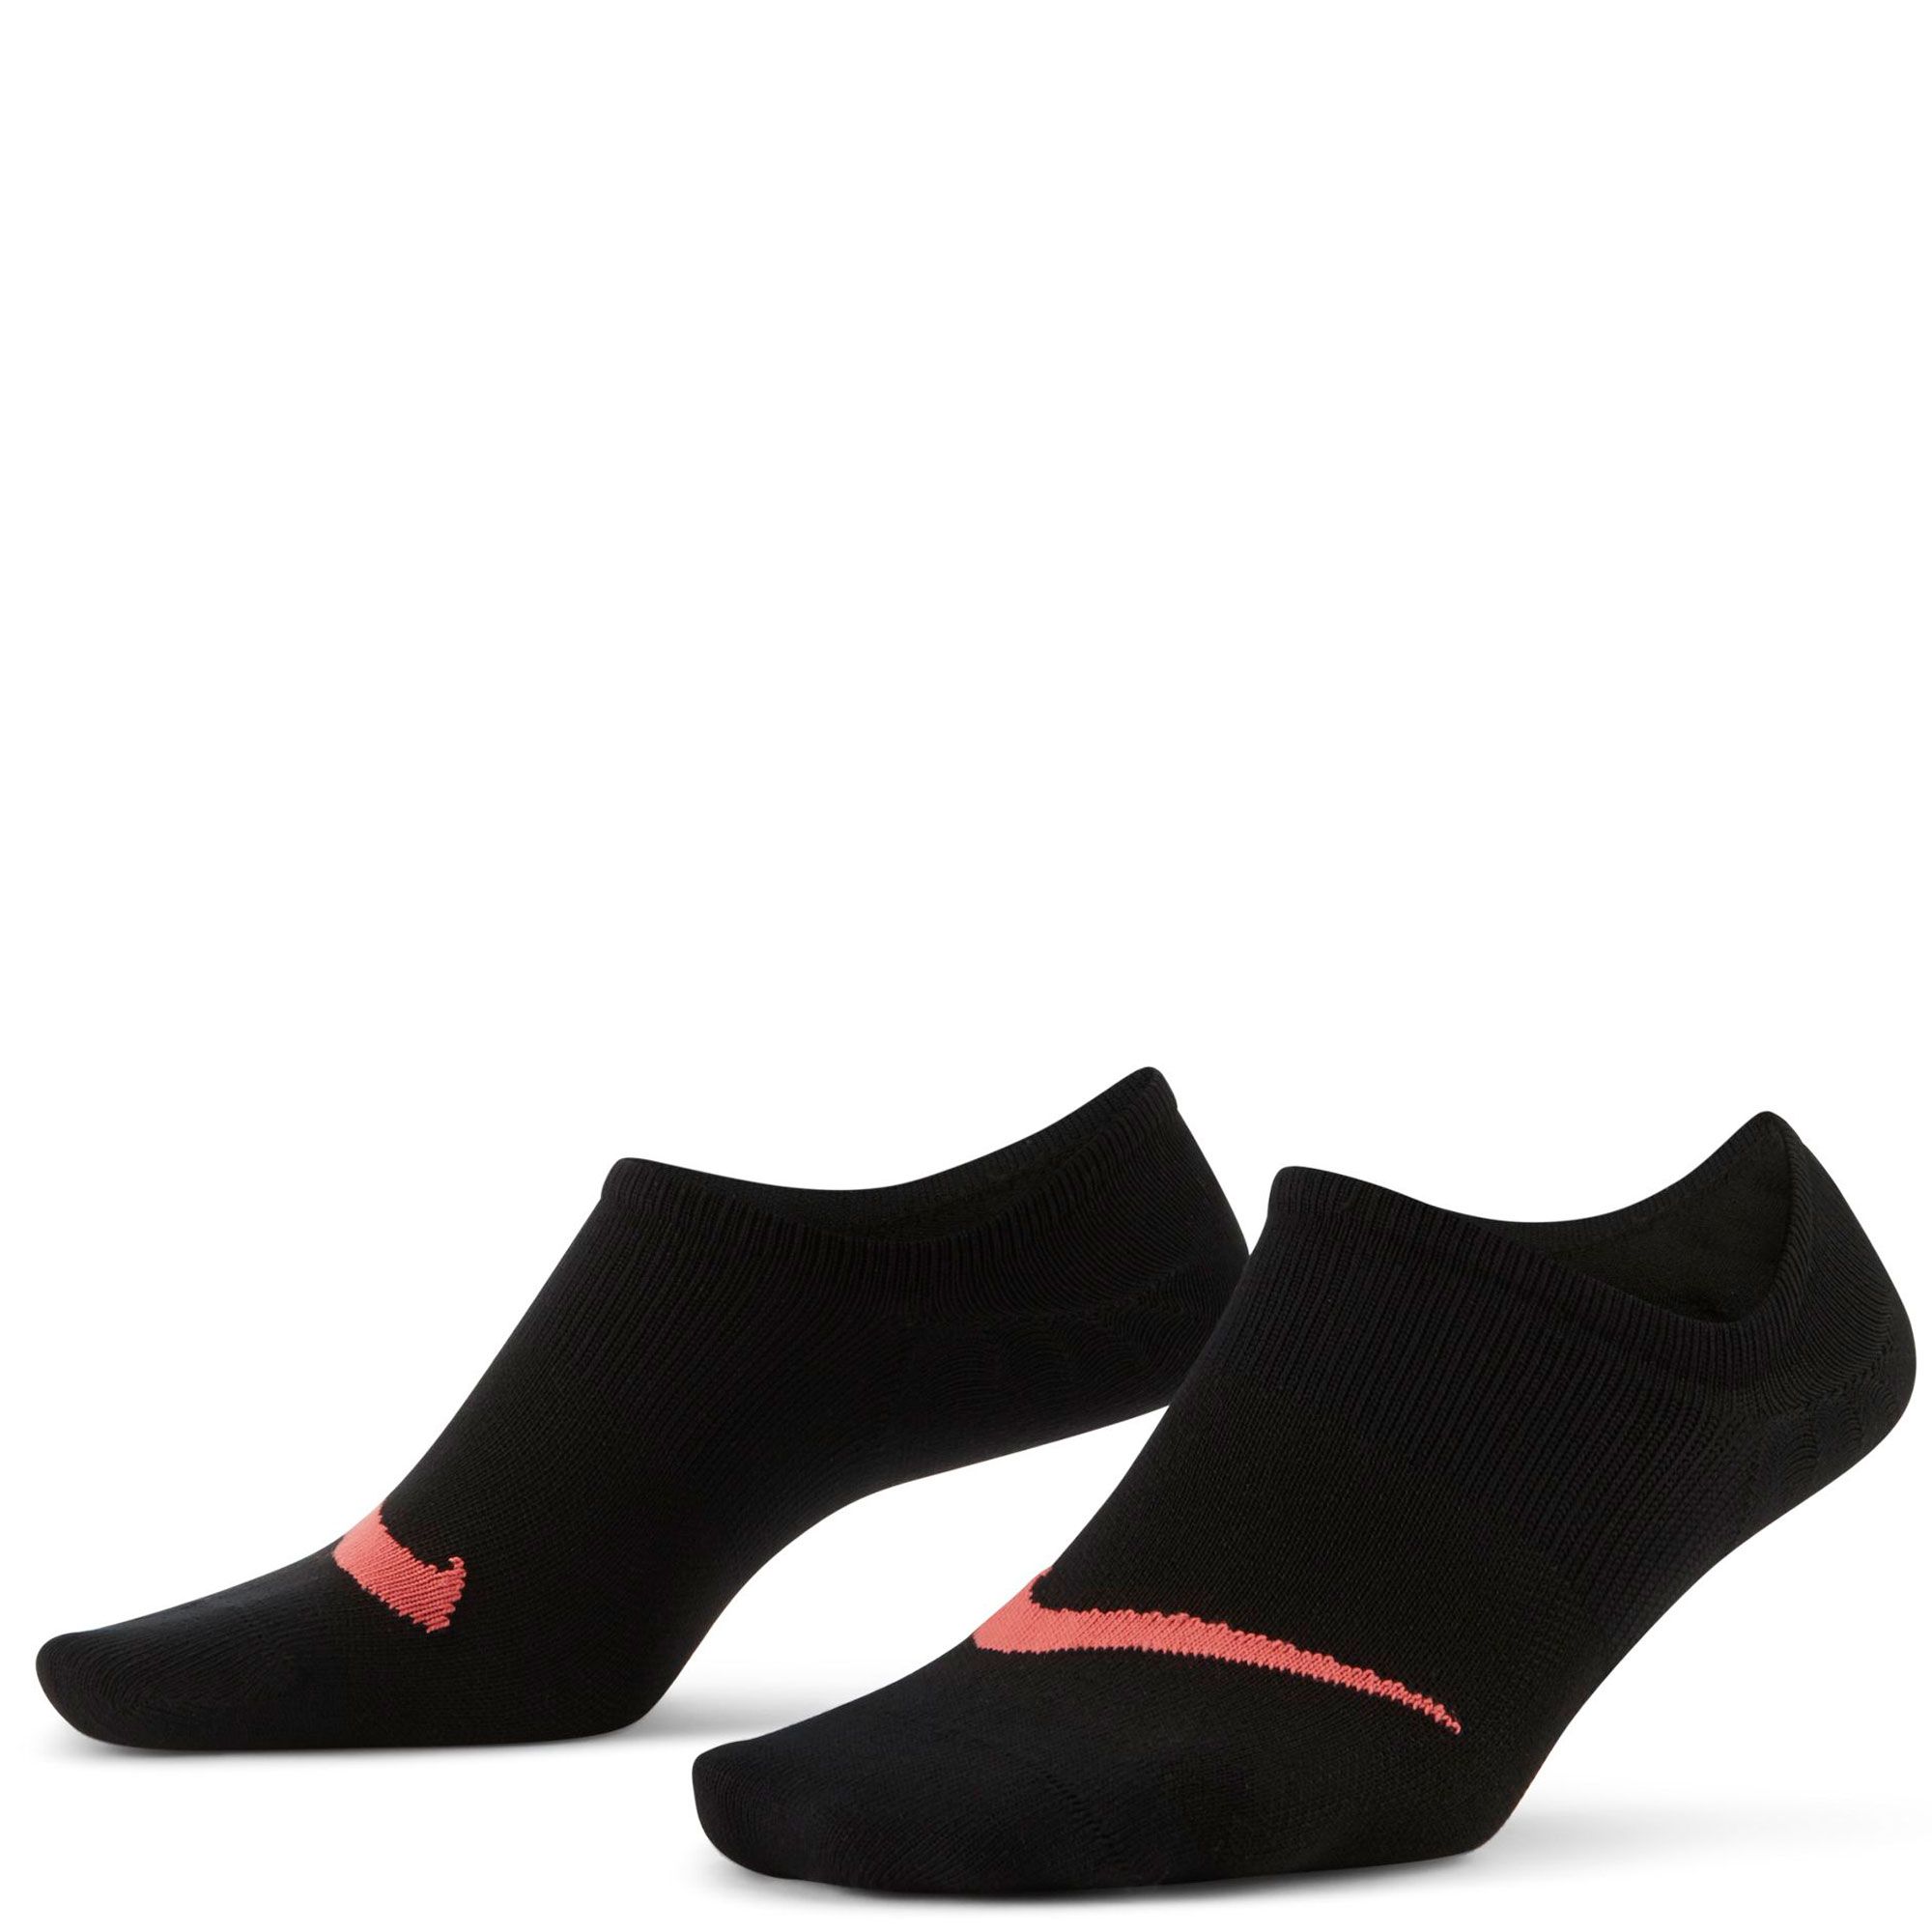 Nike Shoes, Socks, Slides, & Sneakers - JD Sports Australia